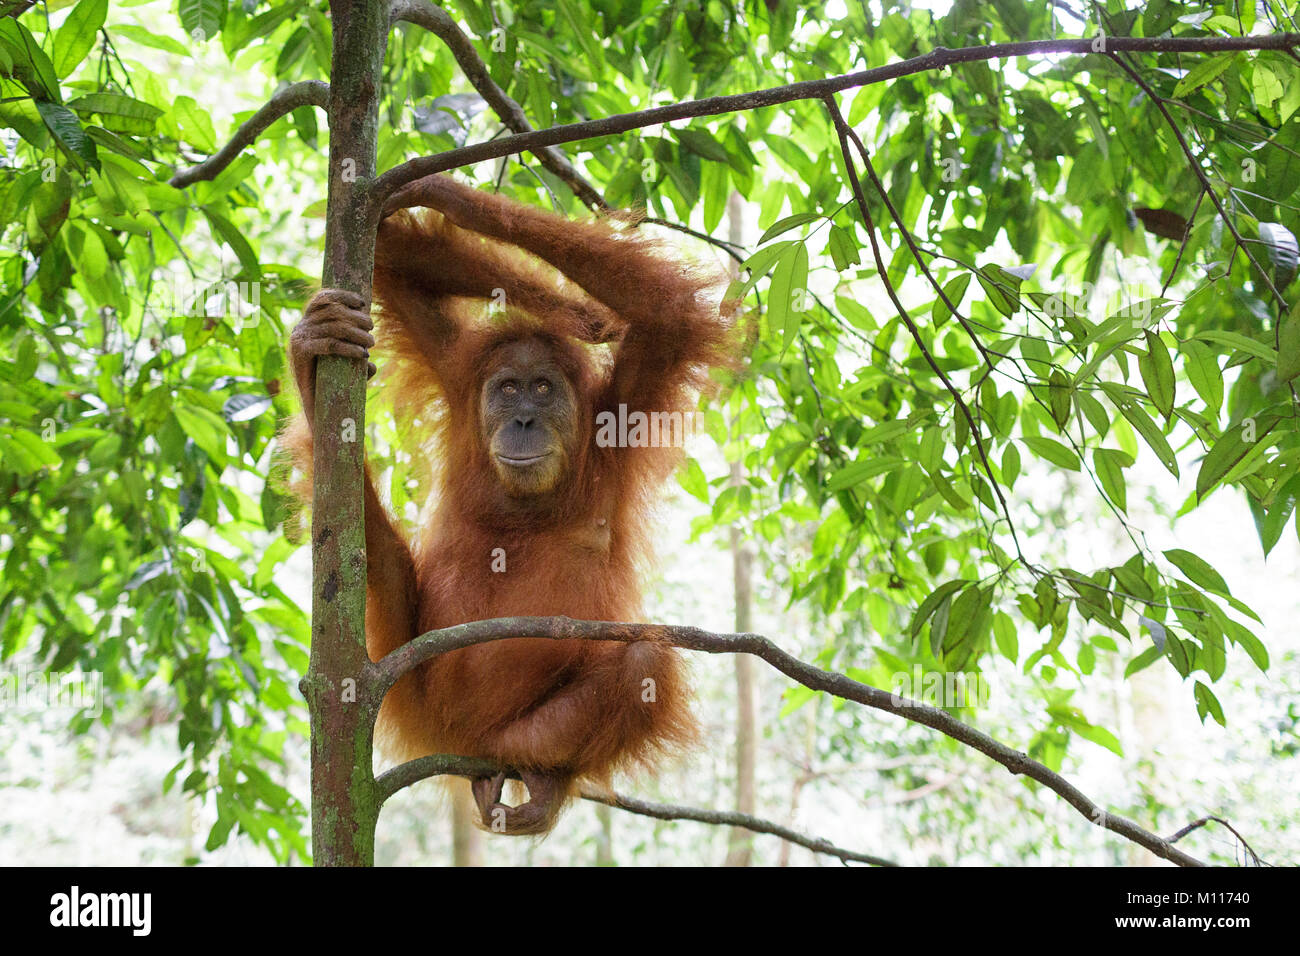 Adult female orangutan hanging from tree branches in Gunung Leuser National Park, Sumatra, Indonesia. Stock Photo